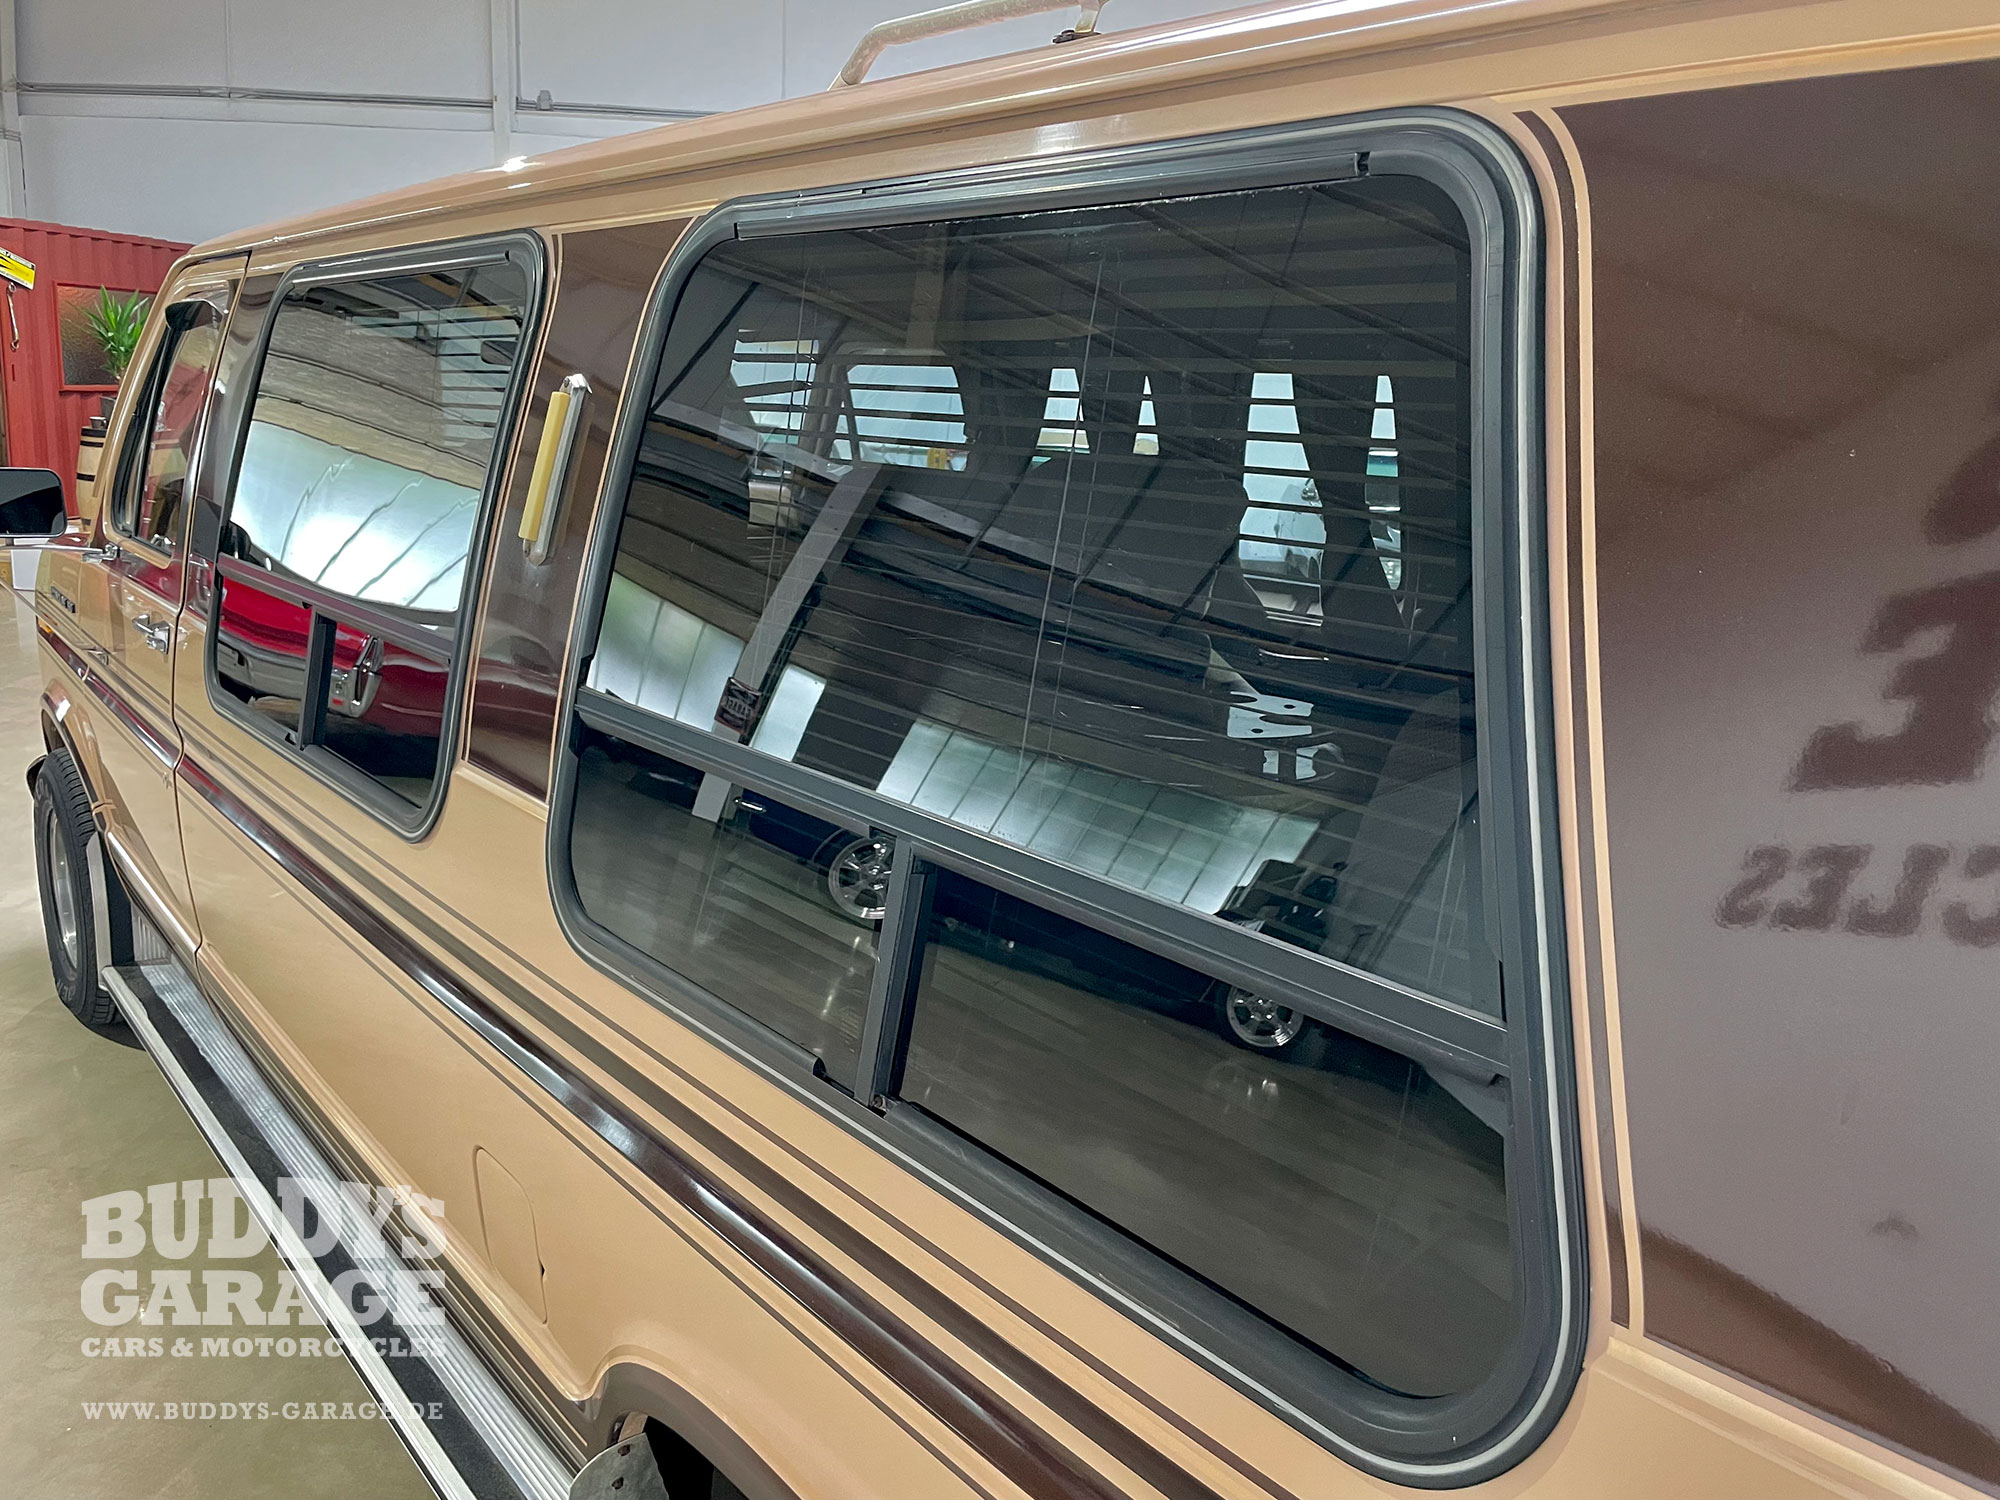 Ford Econoline E150 Conversion Van 1989 | Buddy's Garage Bad Oeynhausen